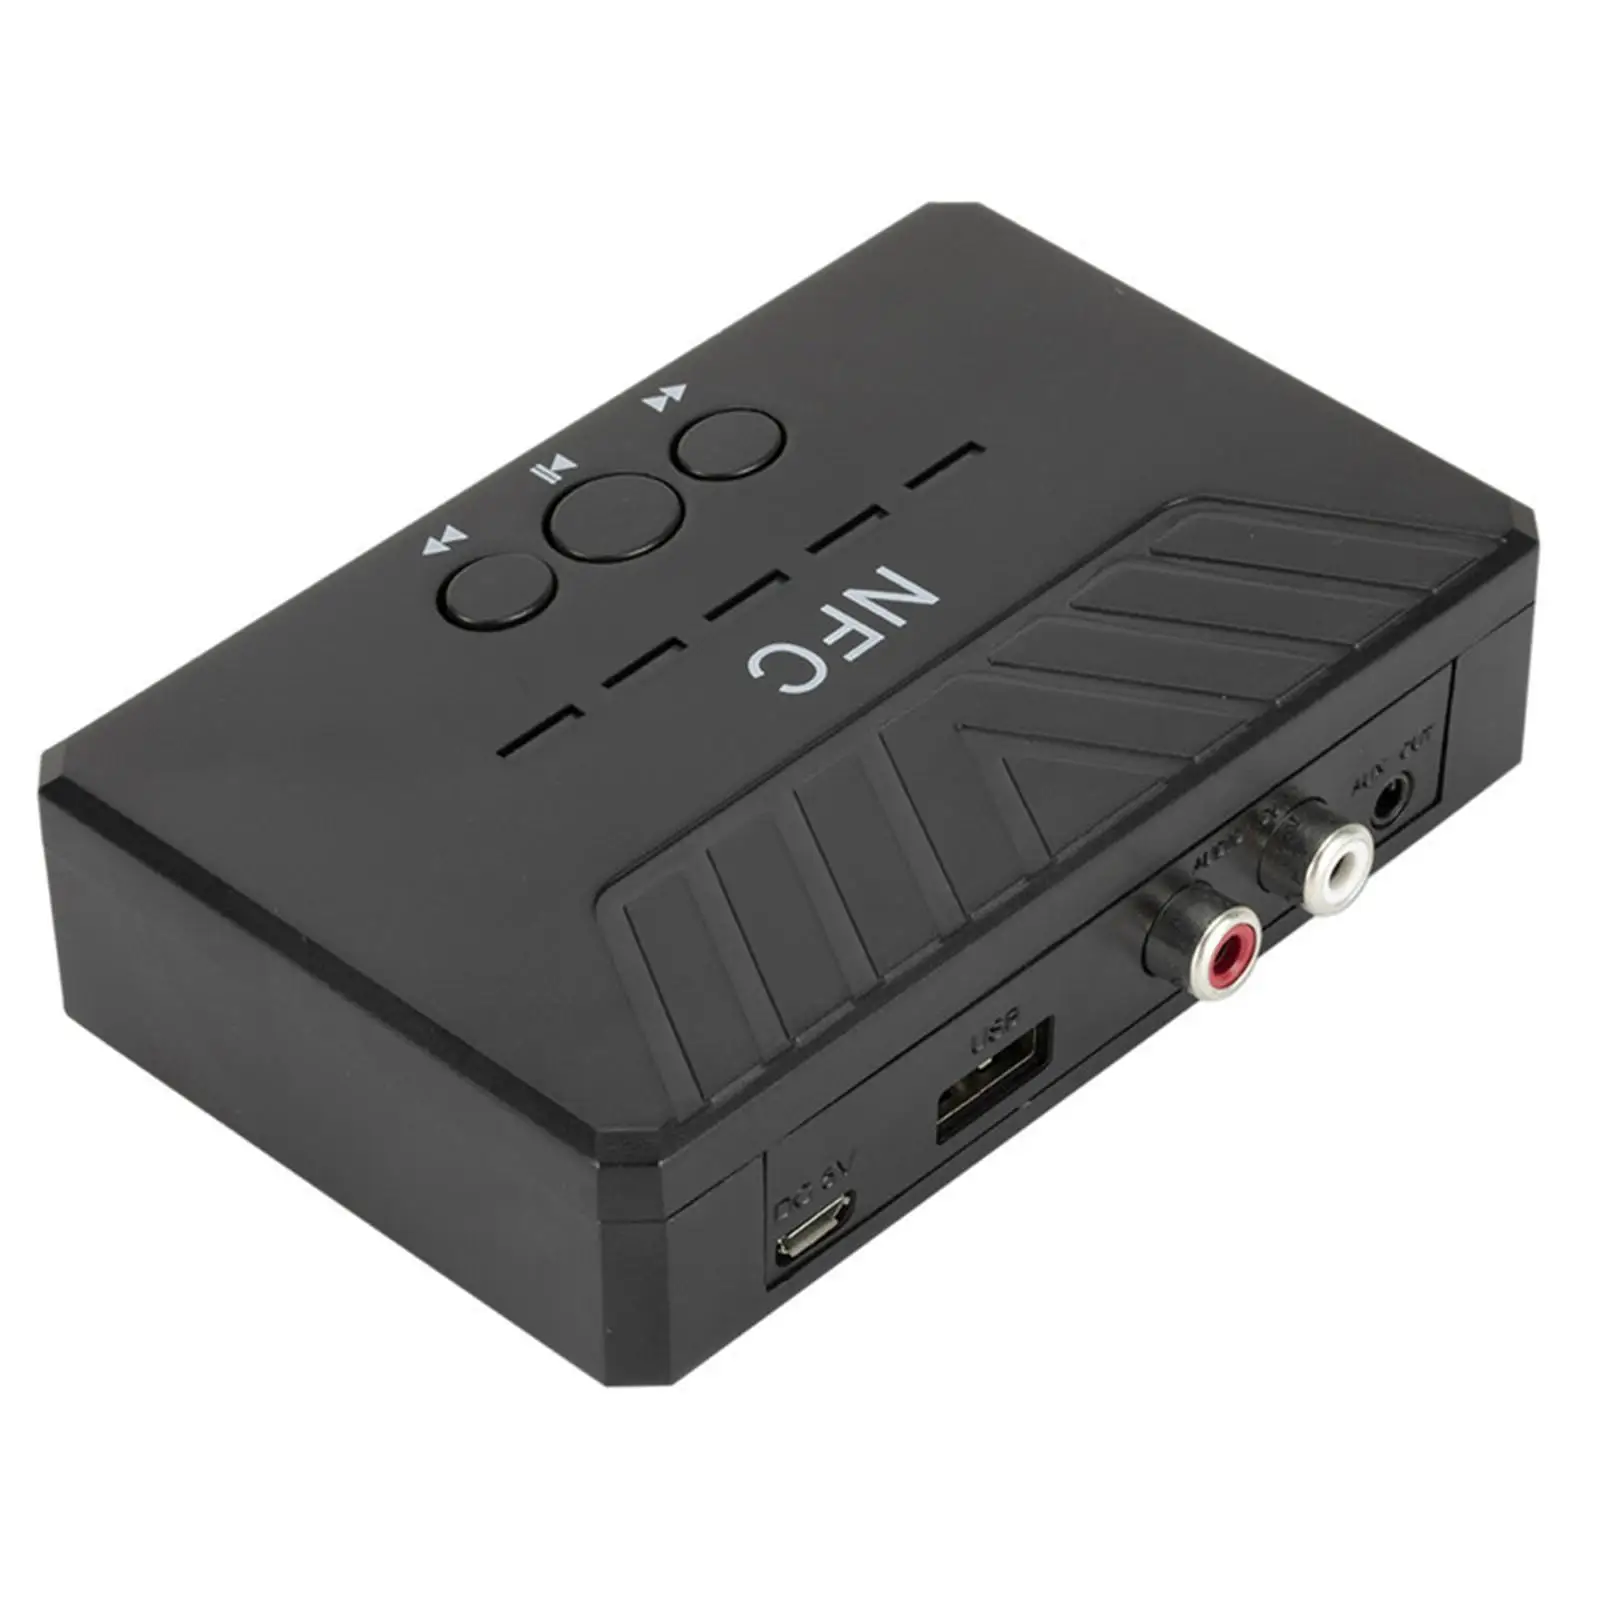   5.0 Audio Receiver Adapter Adjustable Sound Effect Easy Setup